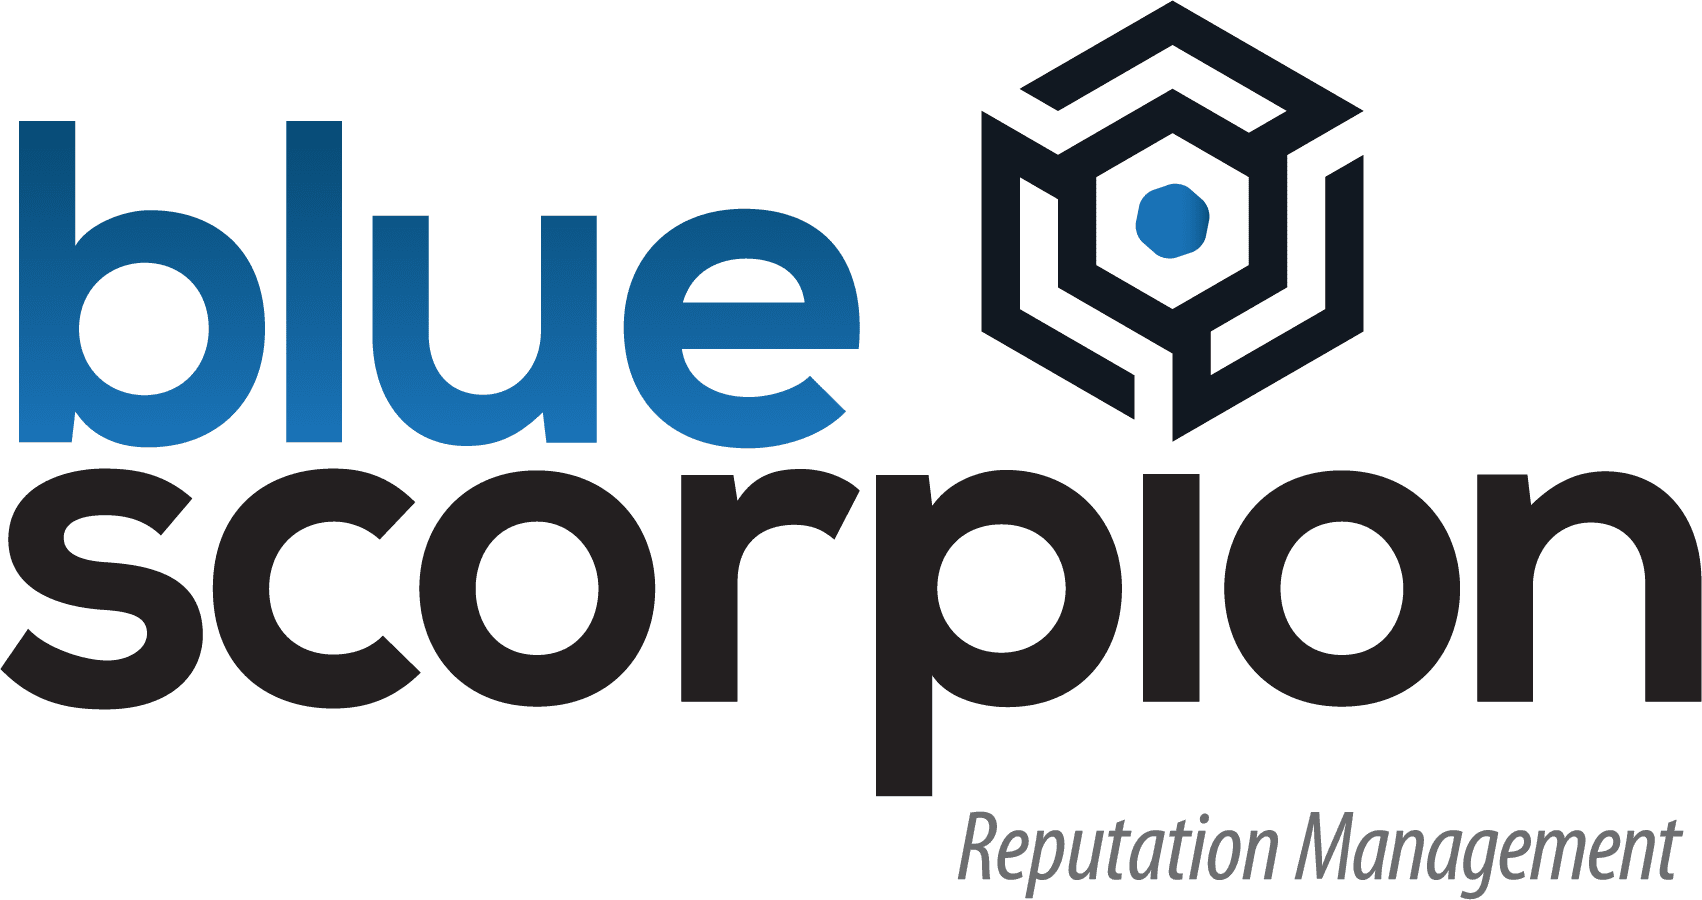 Blue Scorpion Reputation Management - Digital Marketing Agency